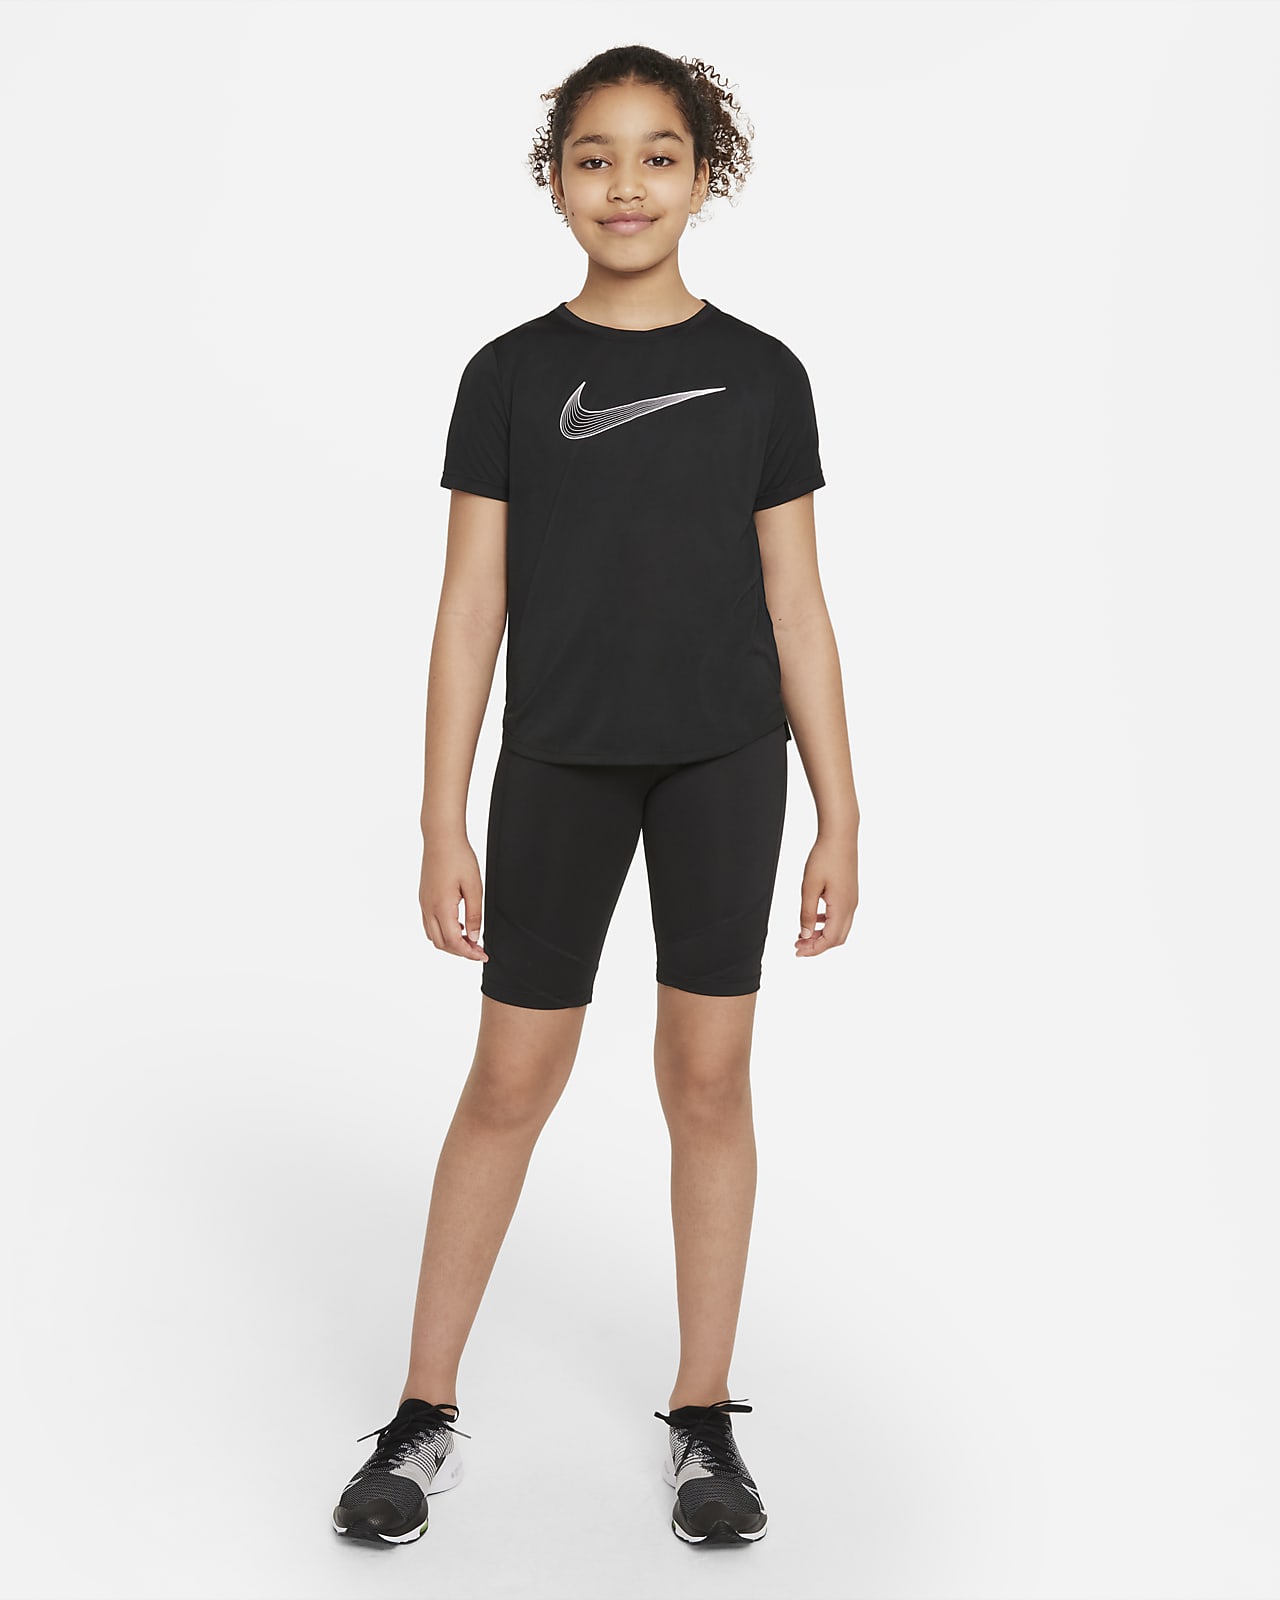 Nike One Top. Dri-FIT Big Training Short-Sleeve (Girls\') Kids